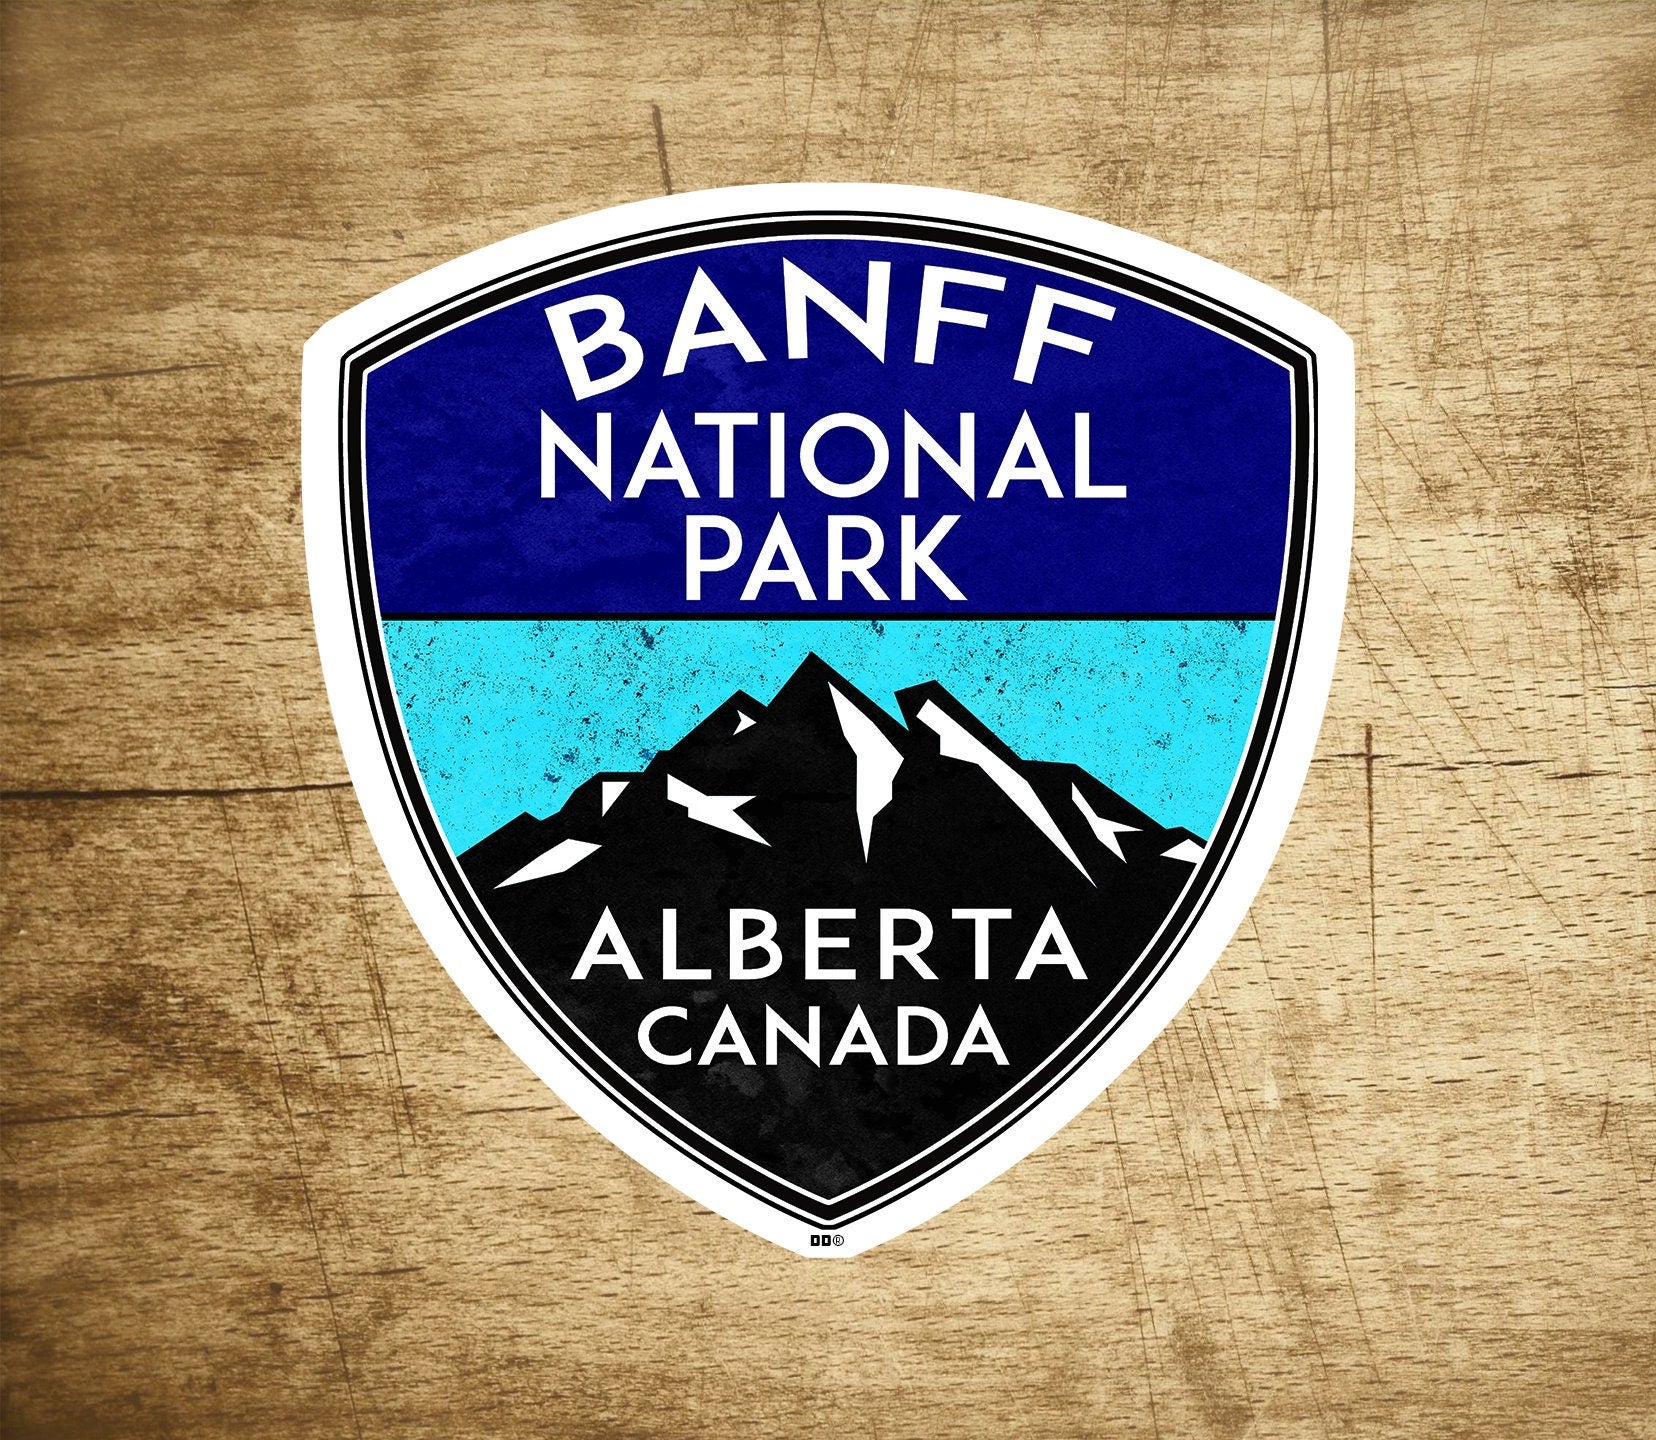 Banff National Park Alberta Canada Sticker Decal 3"